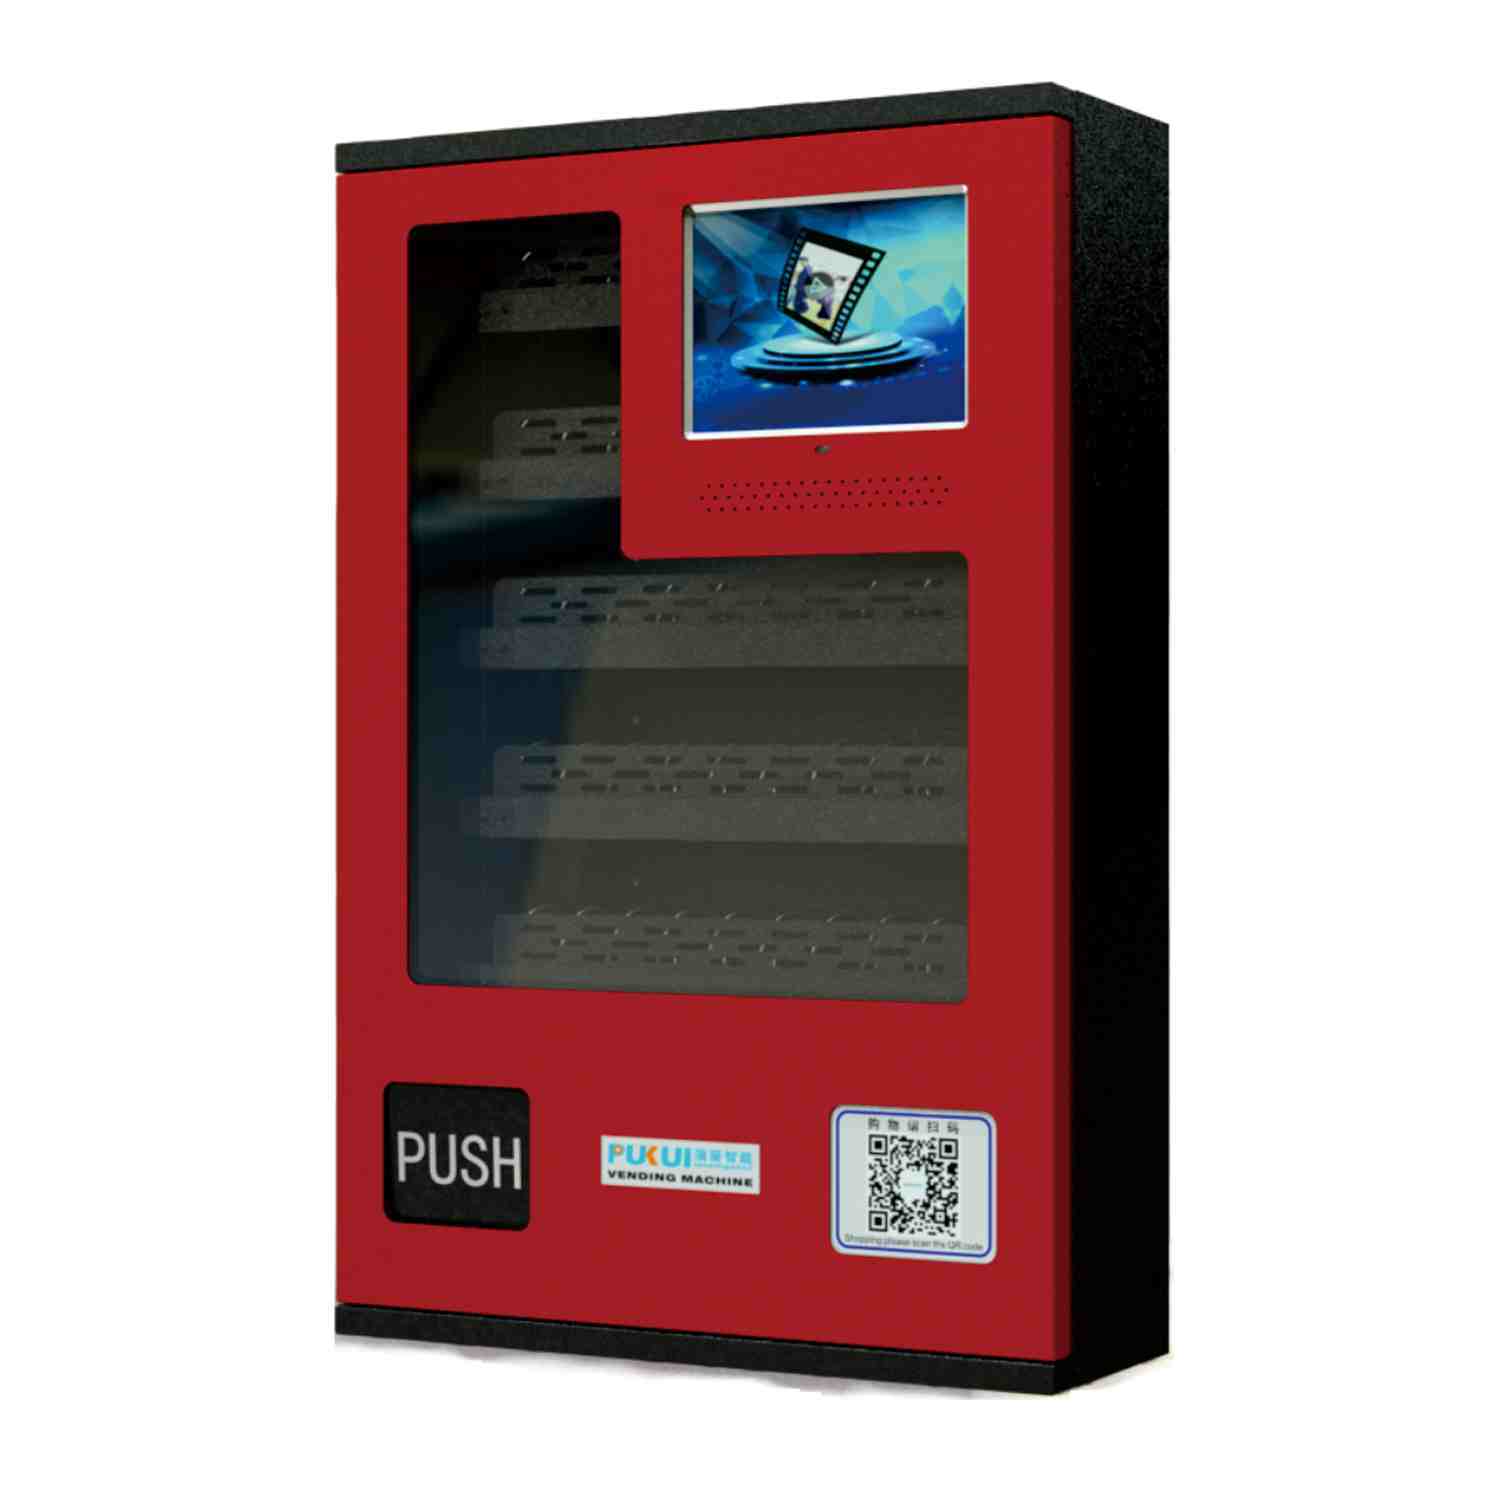 PKS-G1 advertising model wall-mounted vending machine